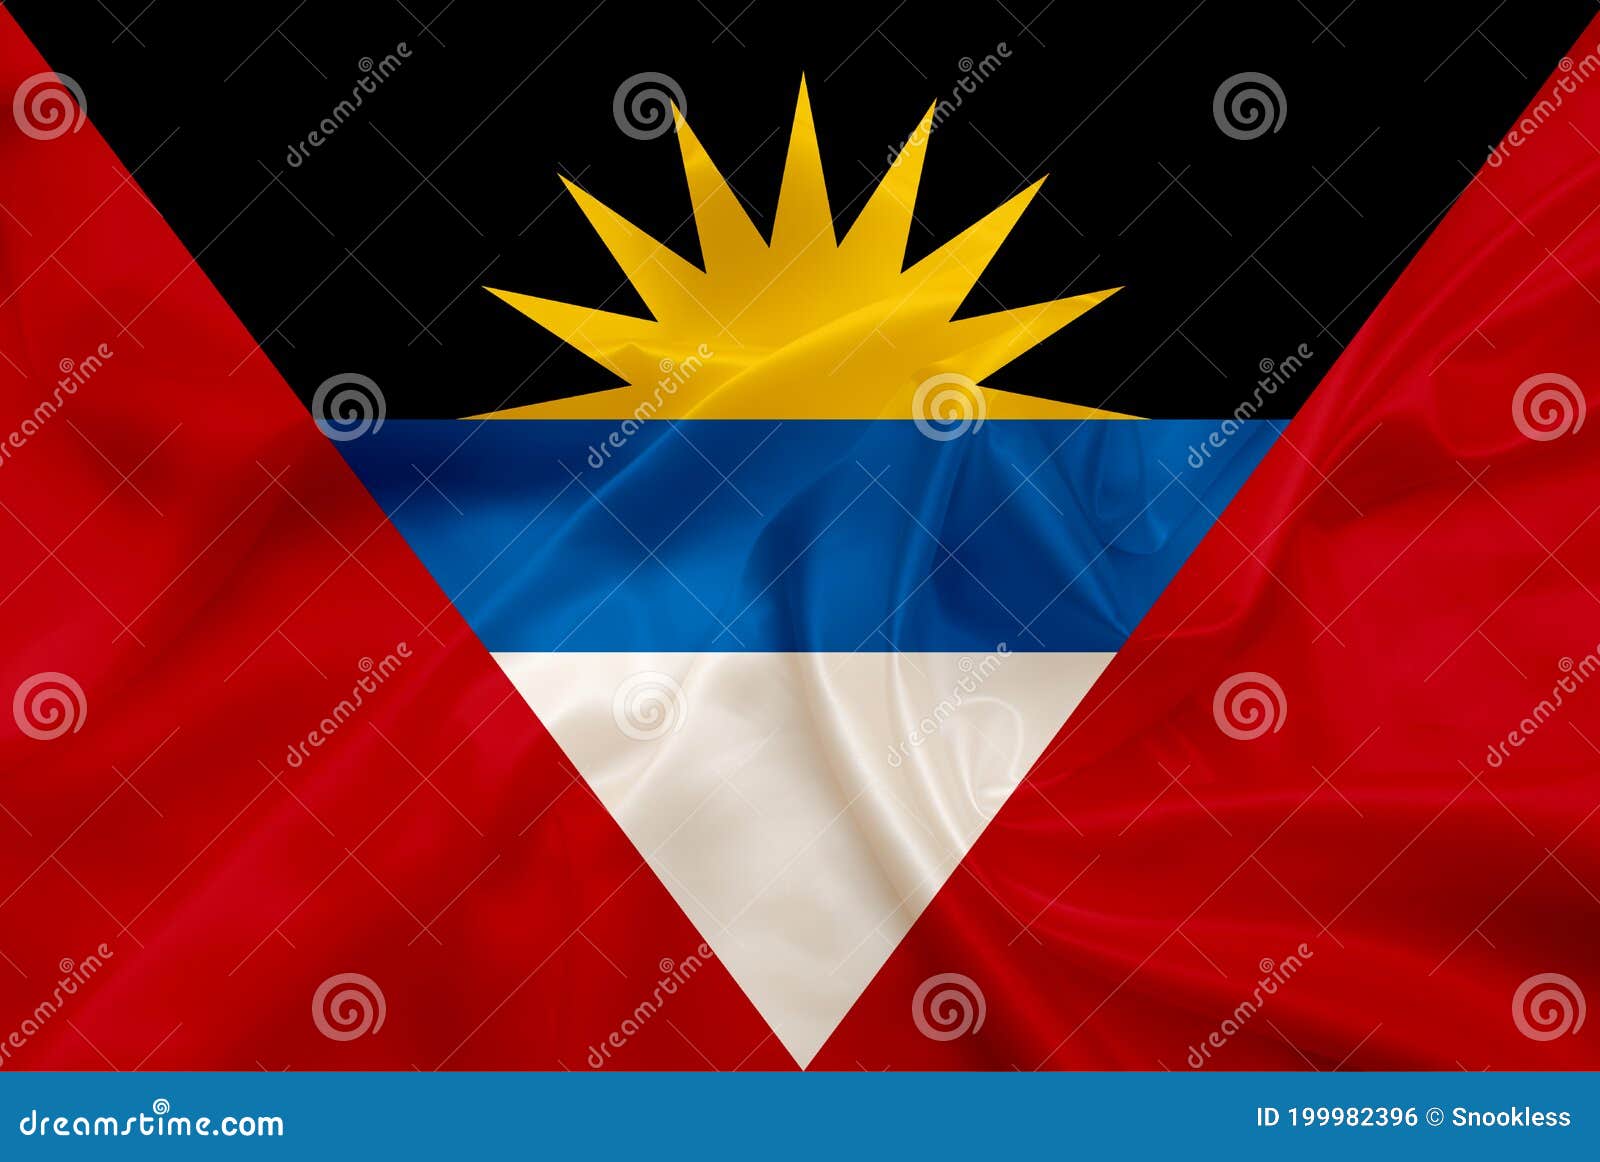 silk antigua and barbuda flag